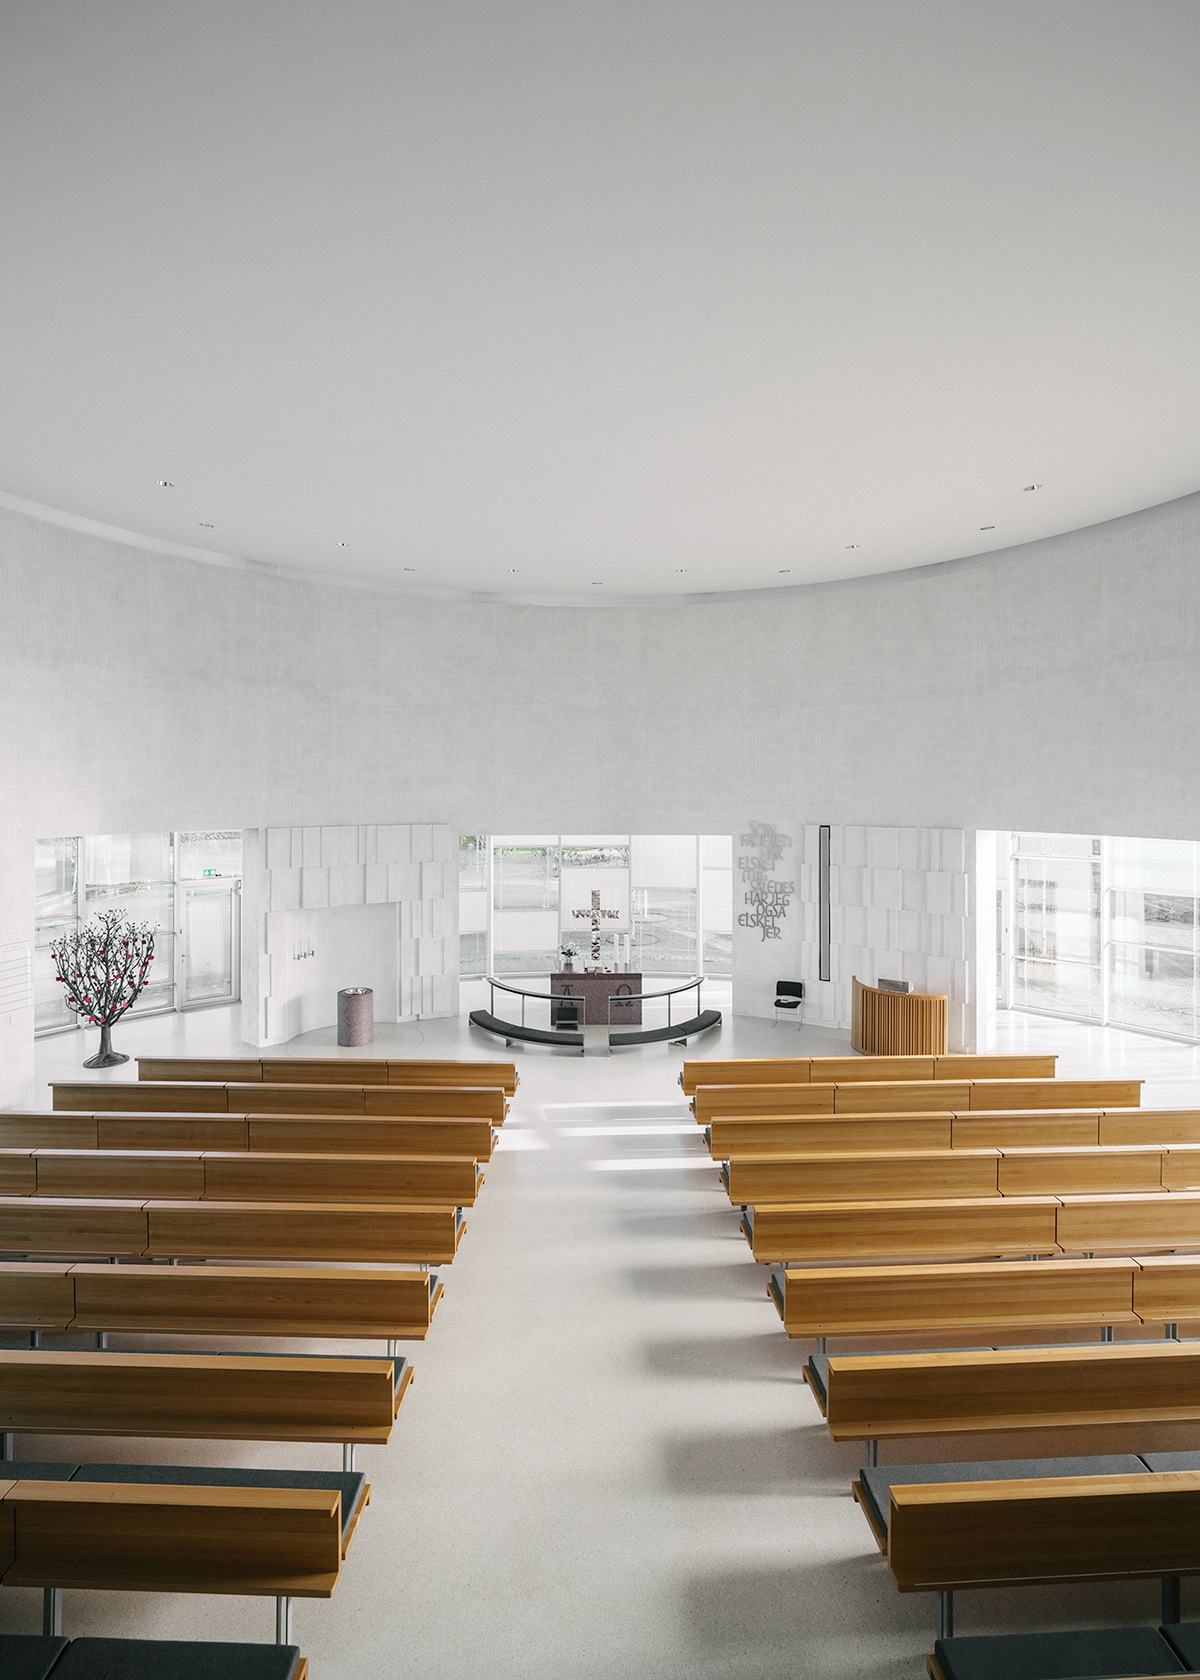 architecture church minimal nordic denmark concrete Elgaard copenhagen Vallensbæk holy